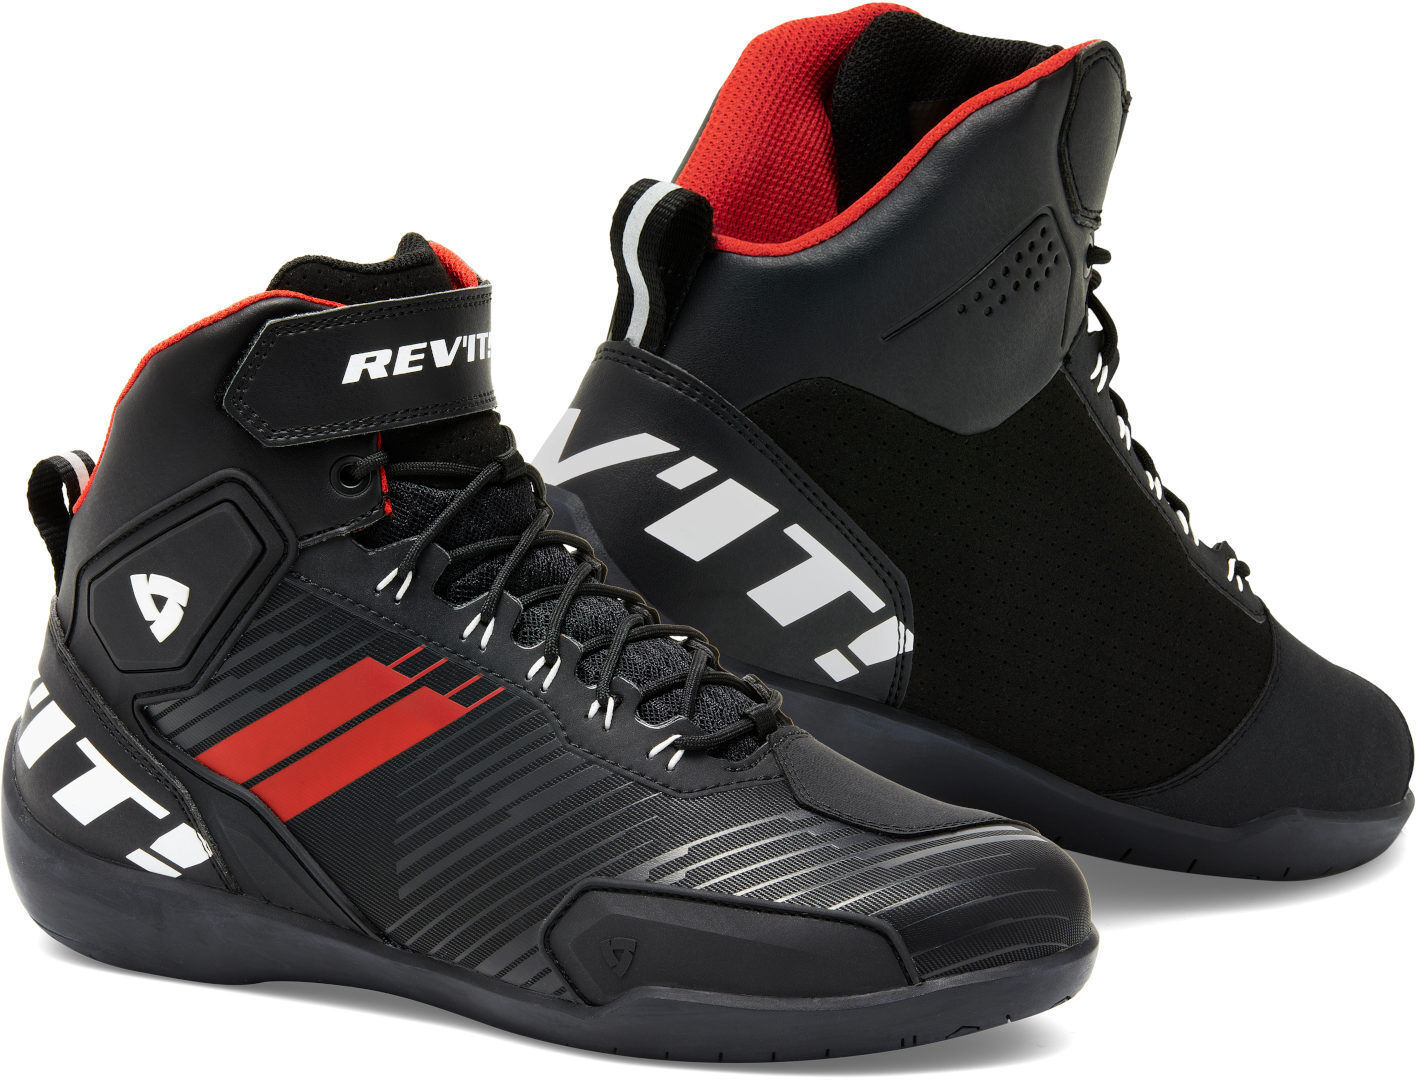 Revit G-Force Zapatos de motocicleta - Negro Blanco Rojo (39)